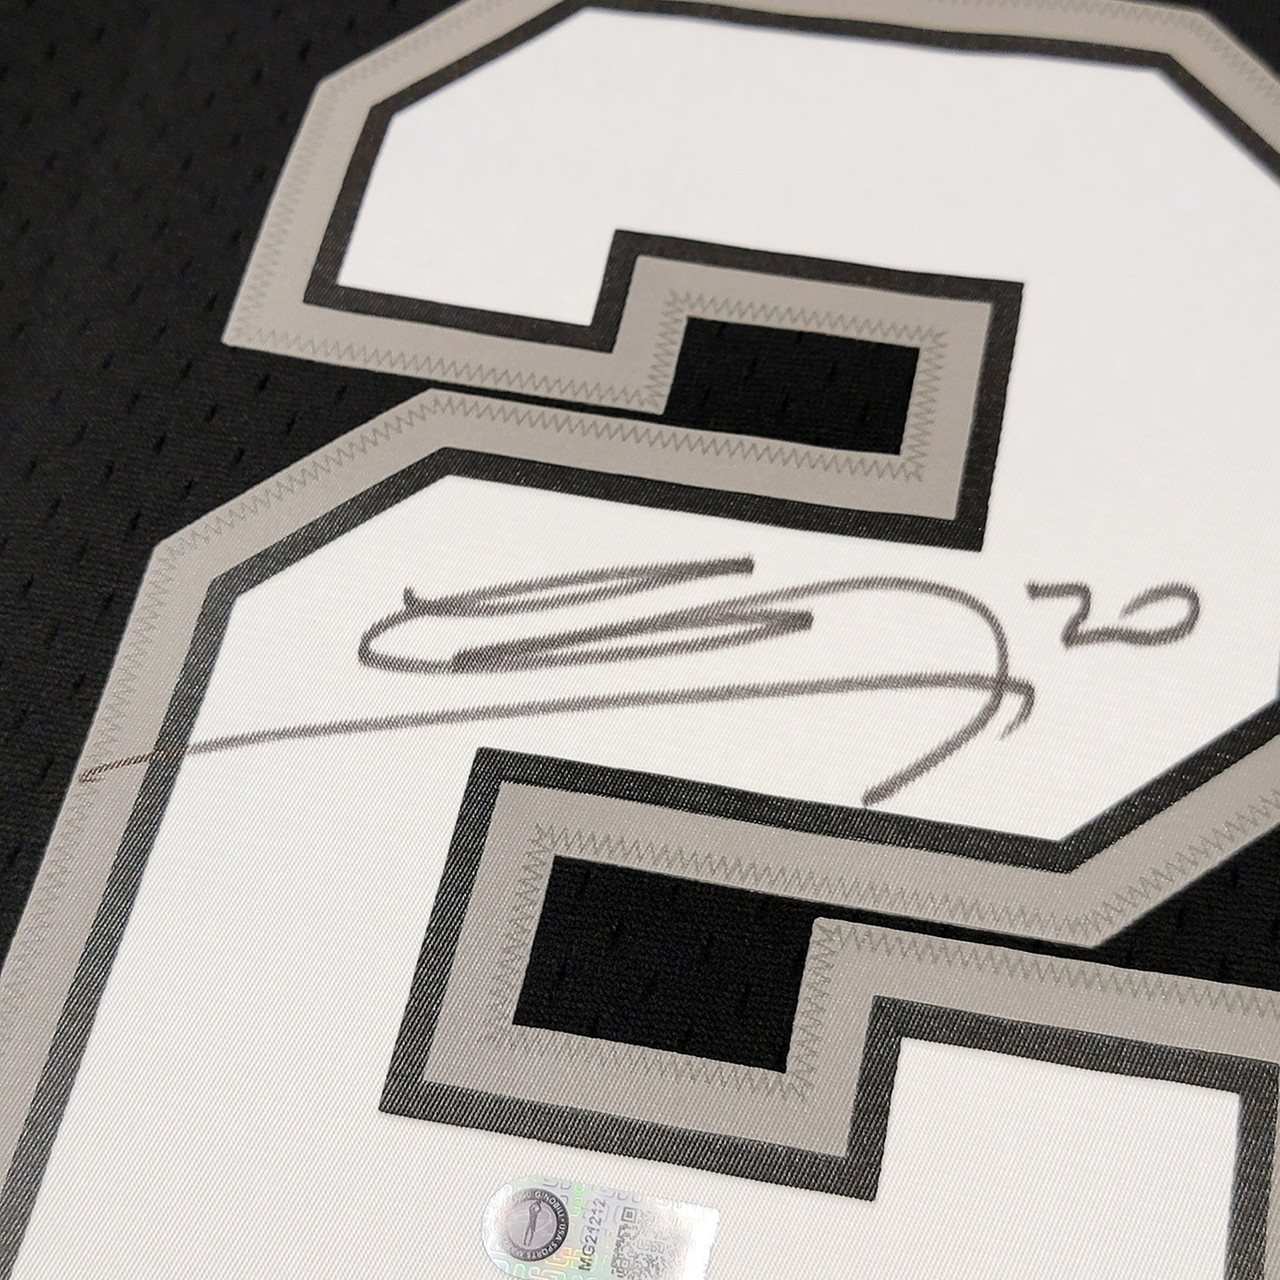 Mitchell and Ness swingman jersey San Antonio Spurs Manu Ginobili 200-03  black / white / silver